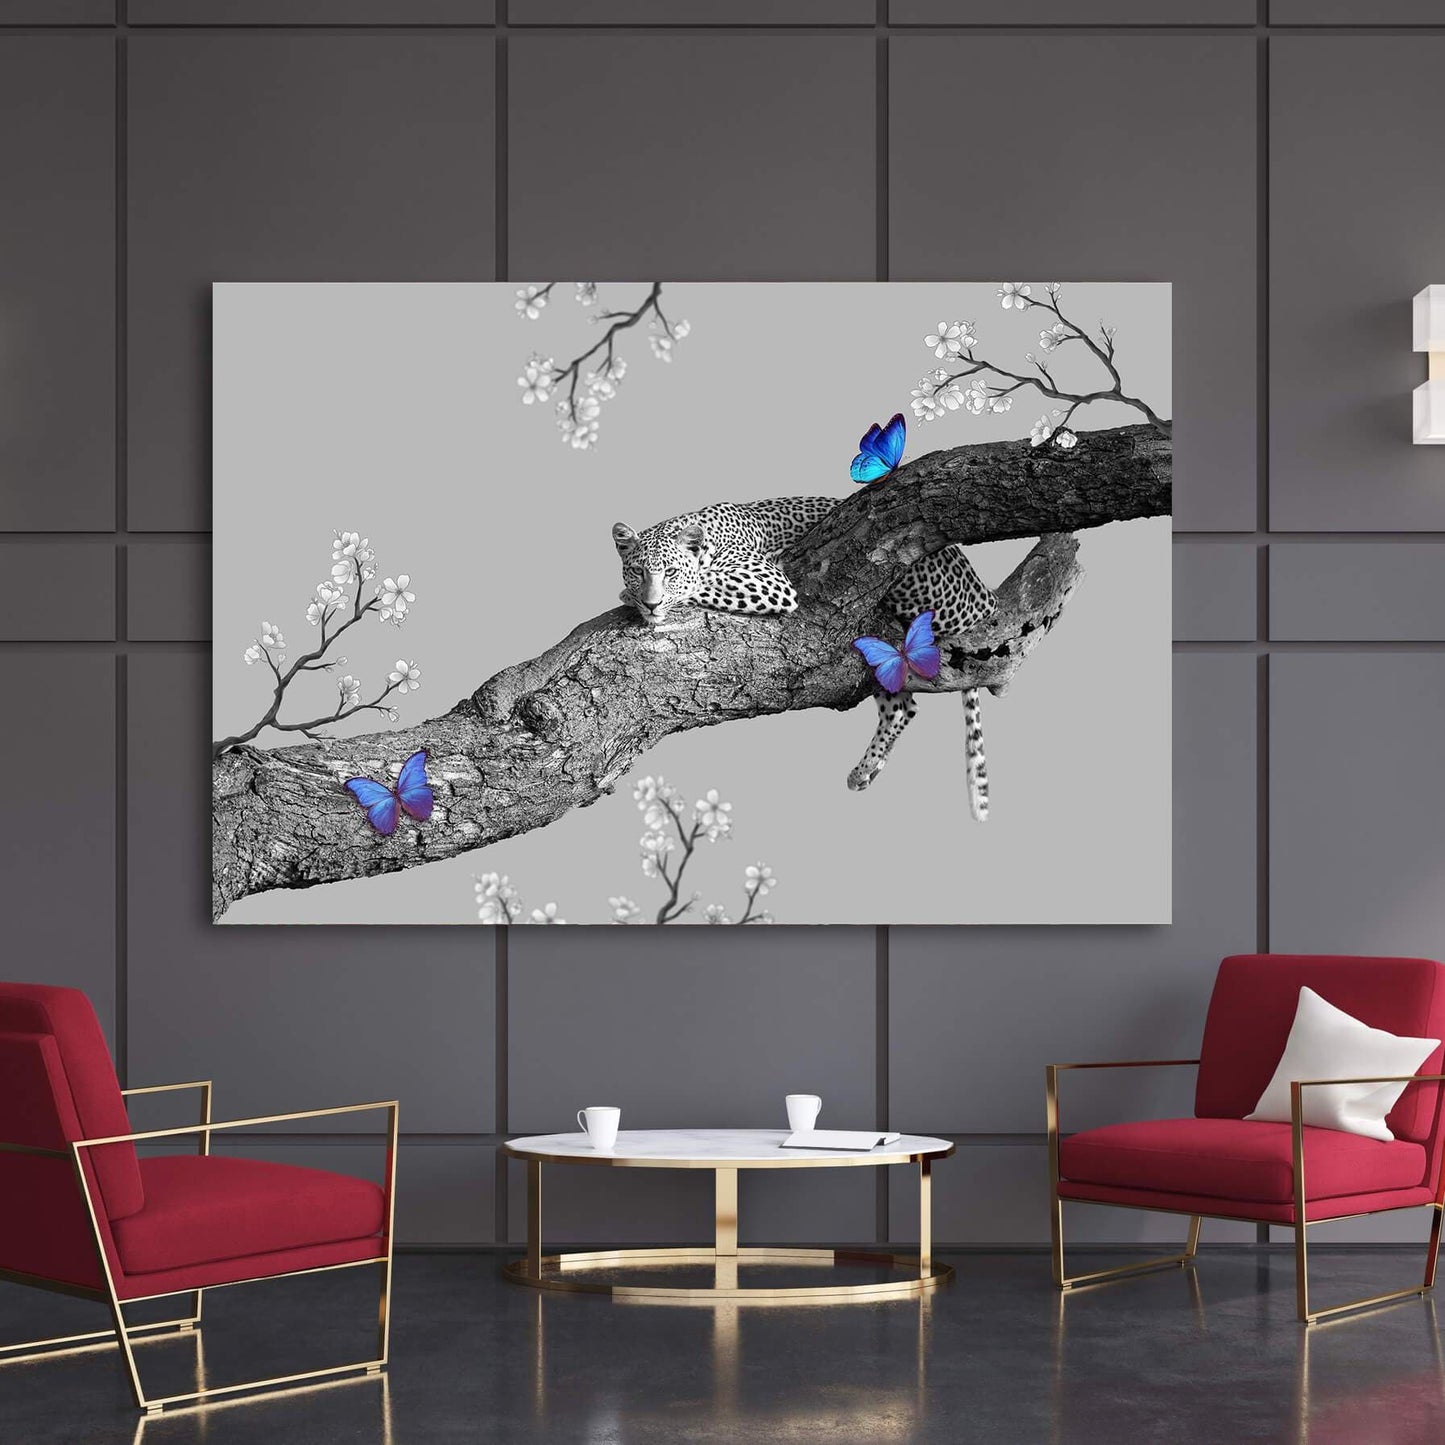 Leopard on Tree Wall Art | Inspirational Wall Art Motivational Wall Art Quotes Office Art | ImpaktMaker Exclusive Canvas Art Landscape